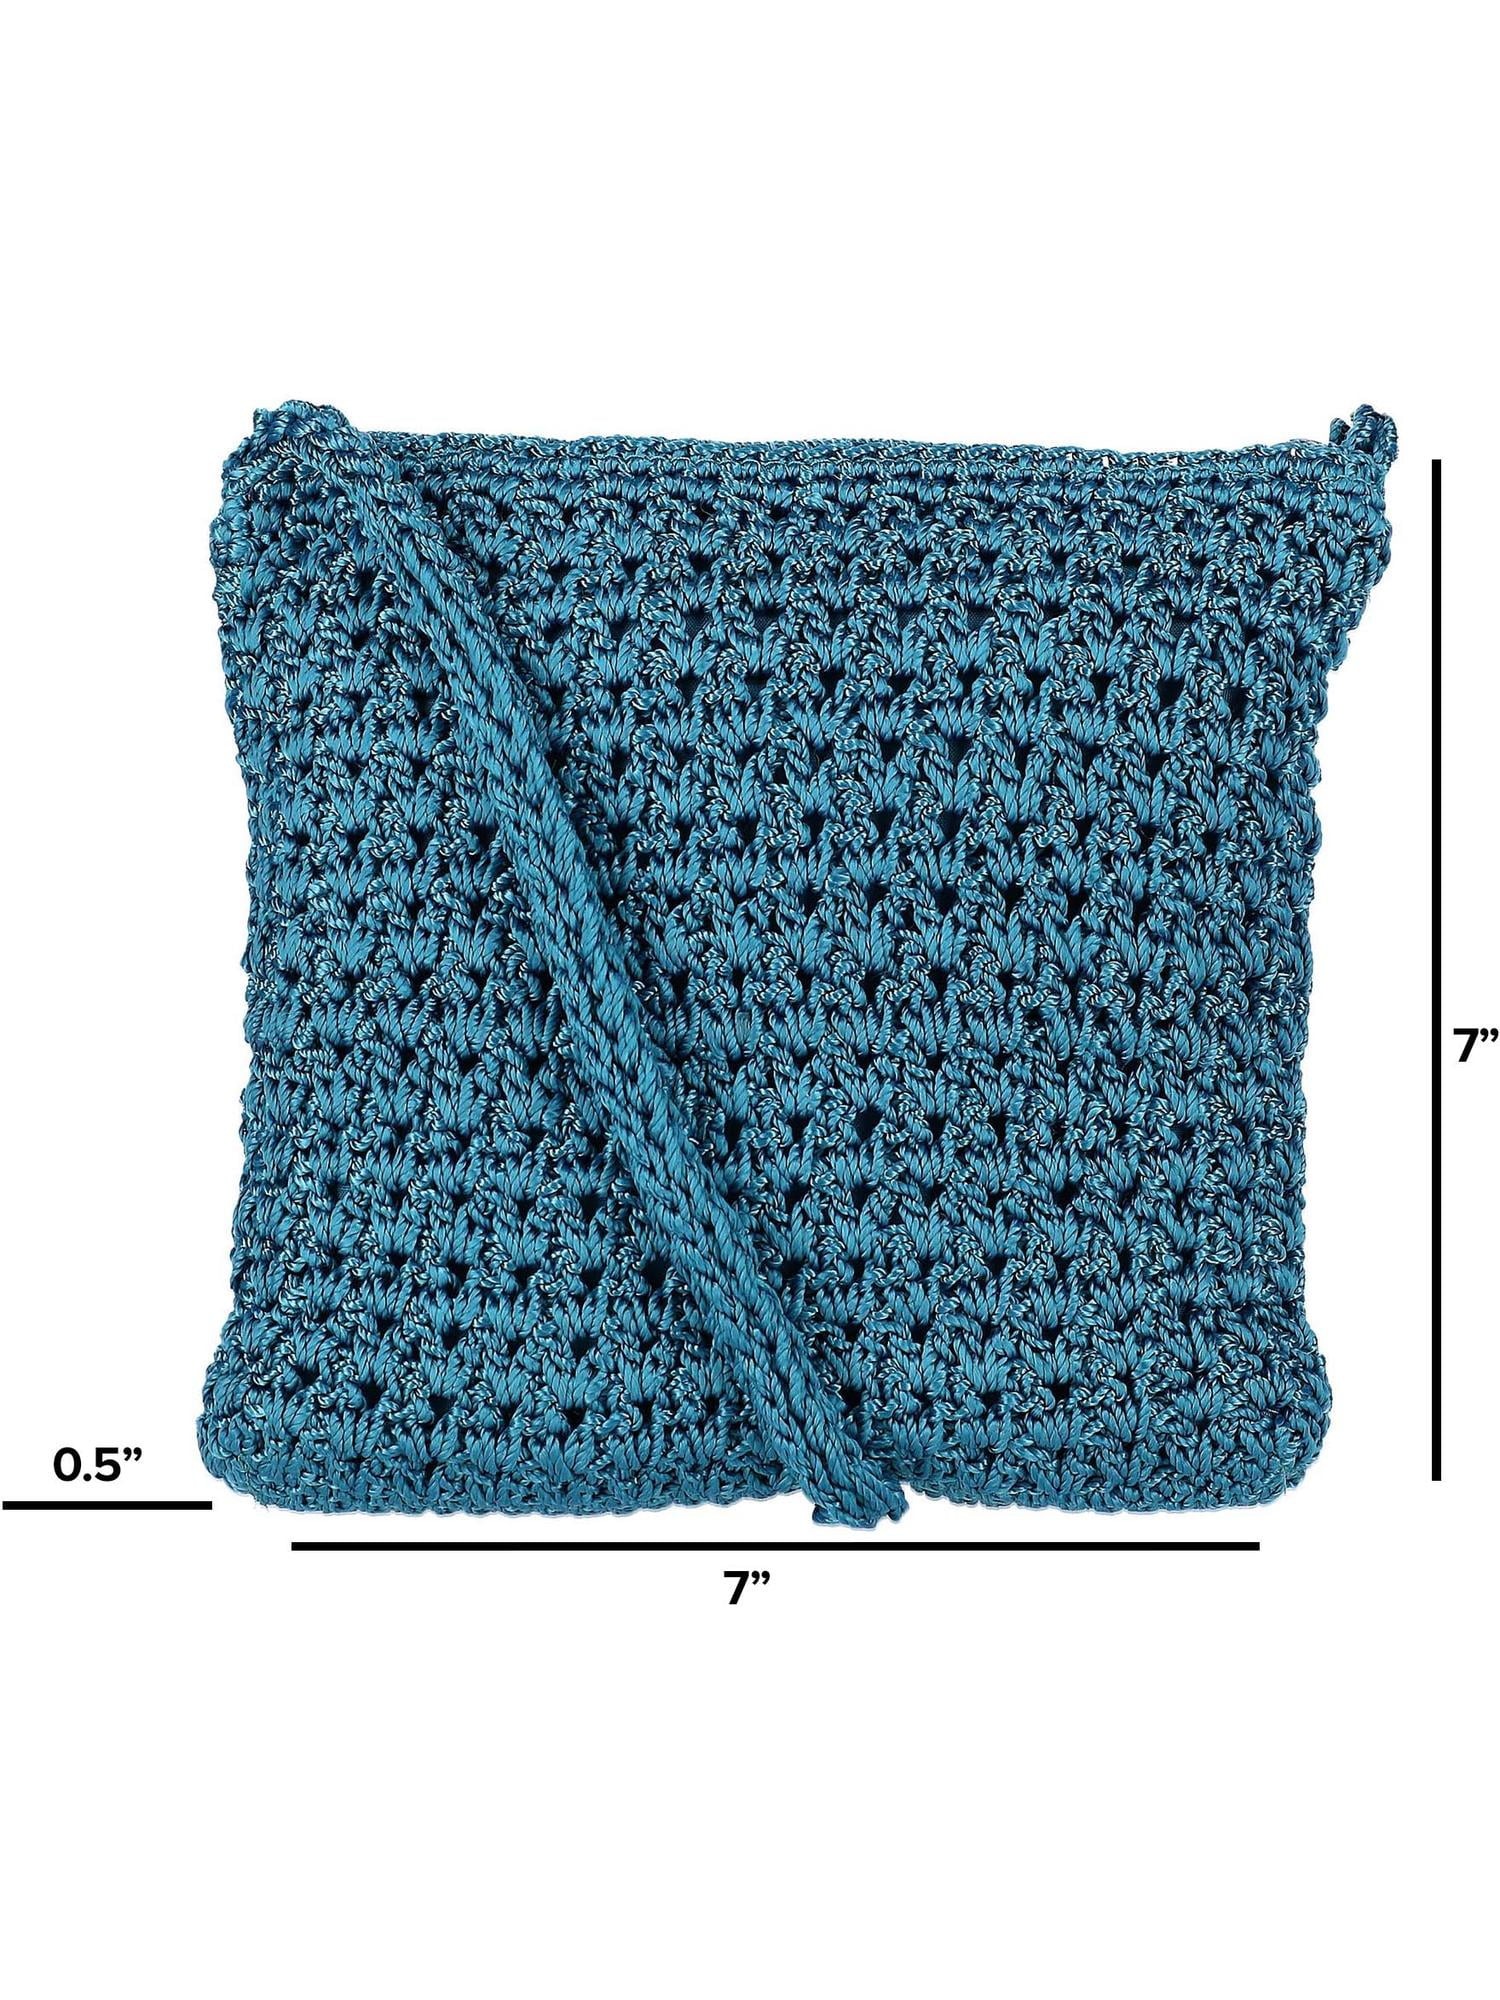 Cute White Crochet Small Handbag Crossbody Purse Crochet Shoulder Bag for  Girl Cute Crochet Purses